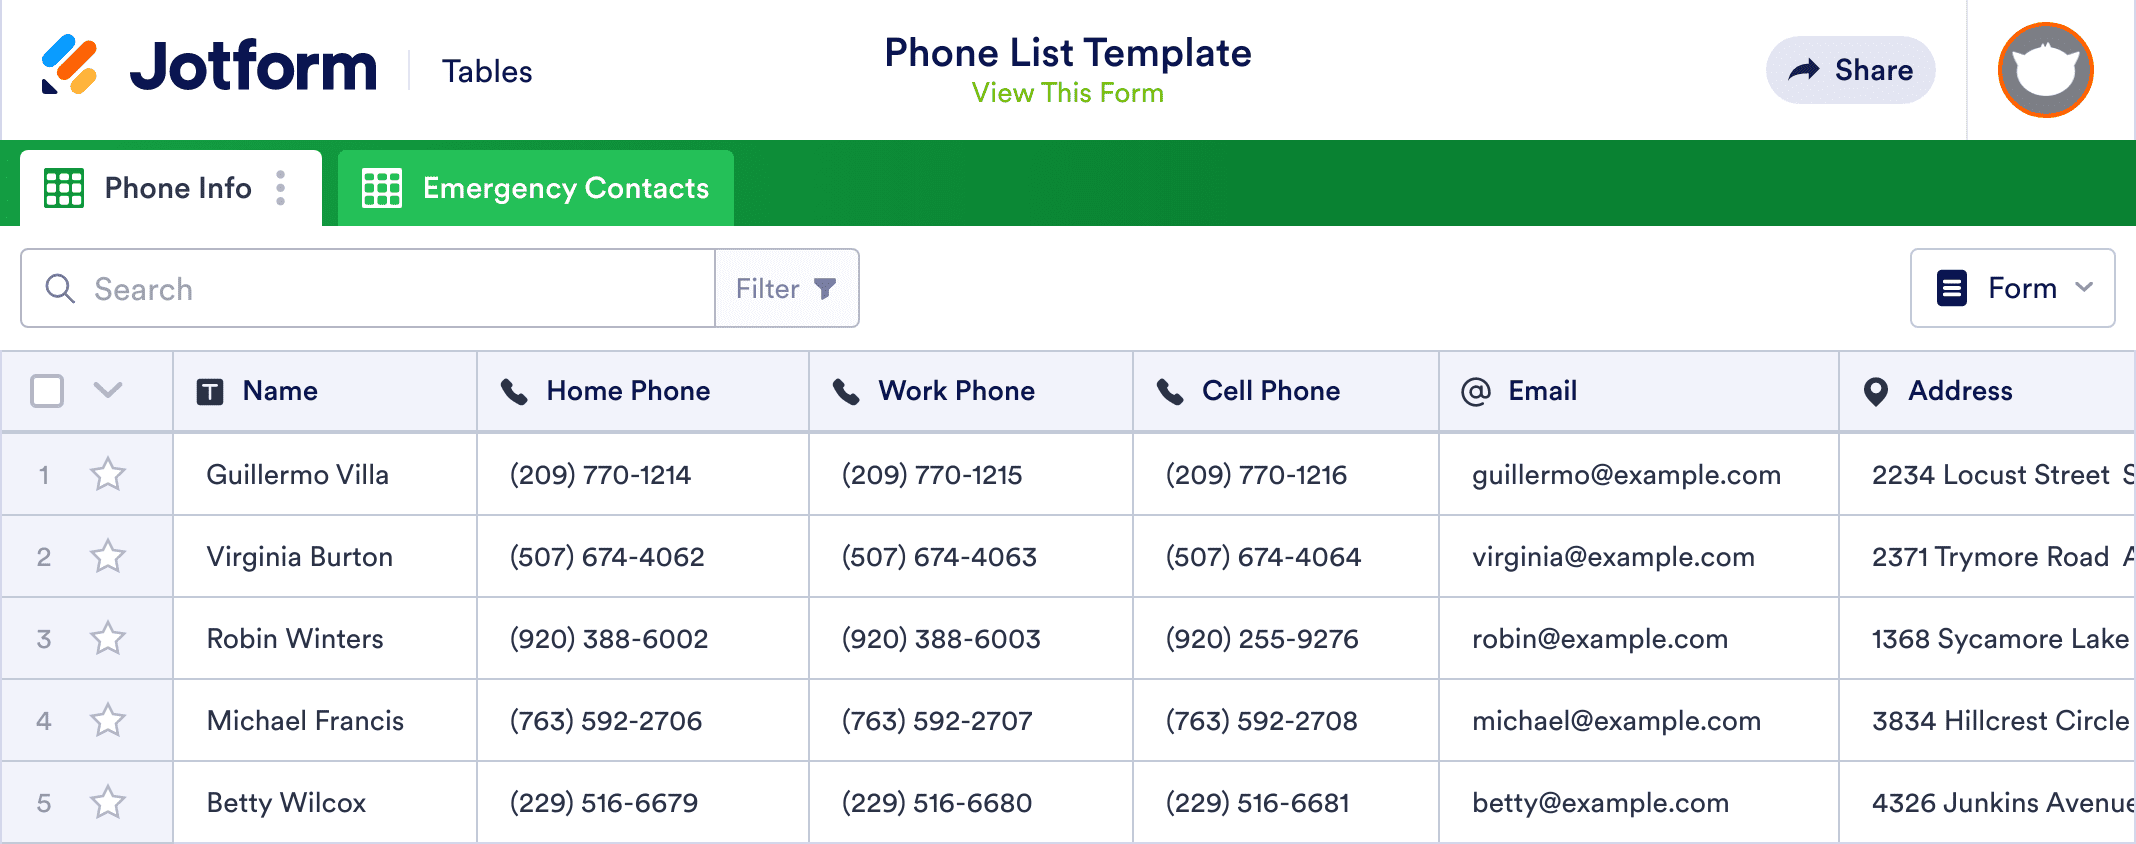 Phone List Template